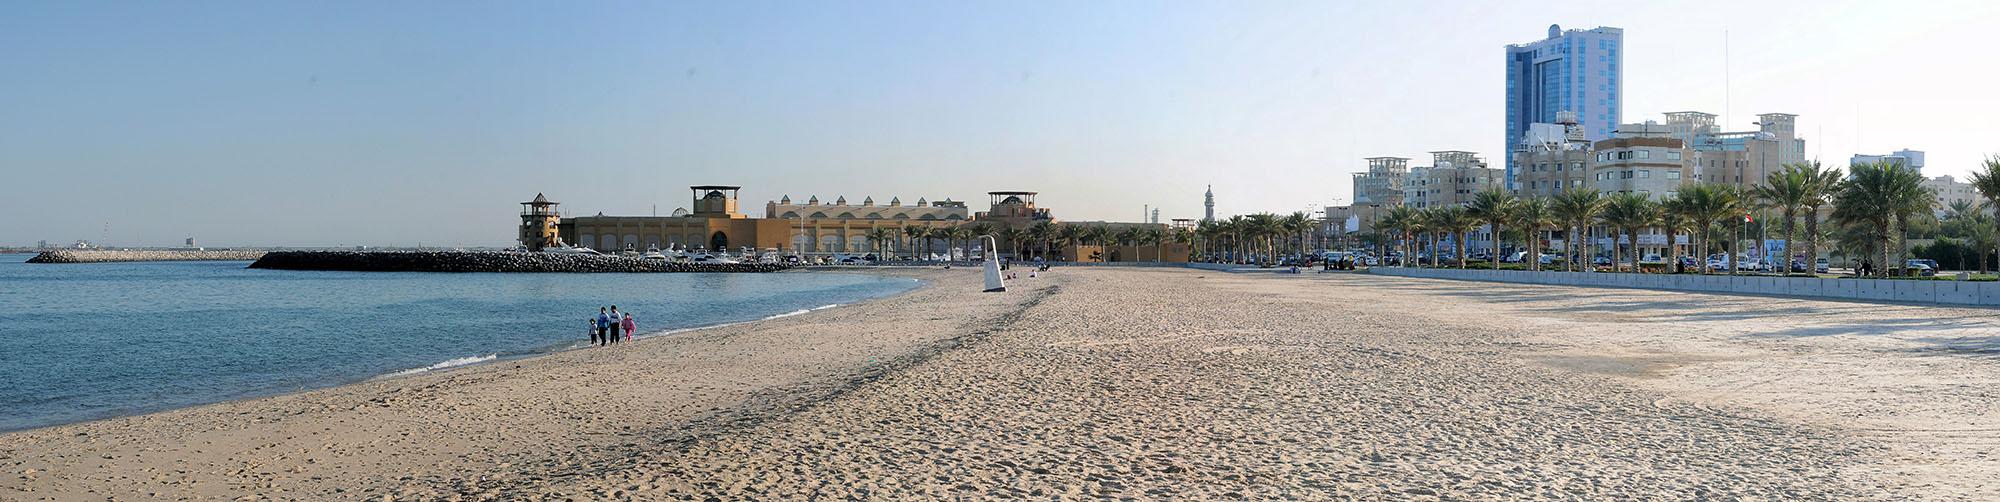 Fahaheel Water Front Promenade